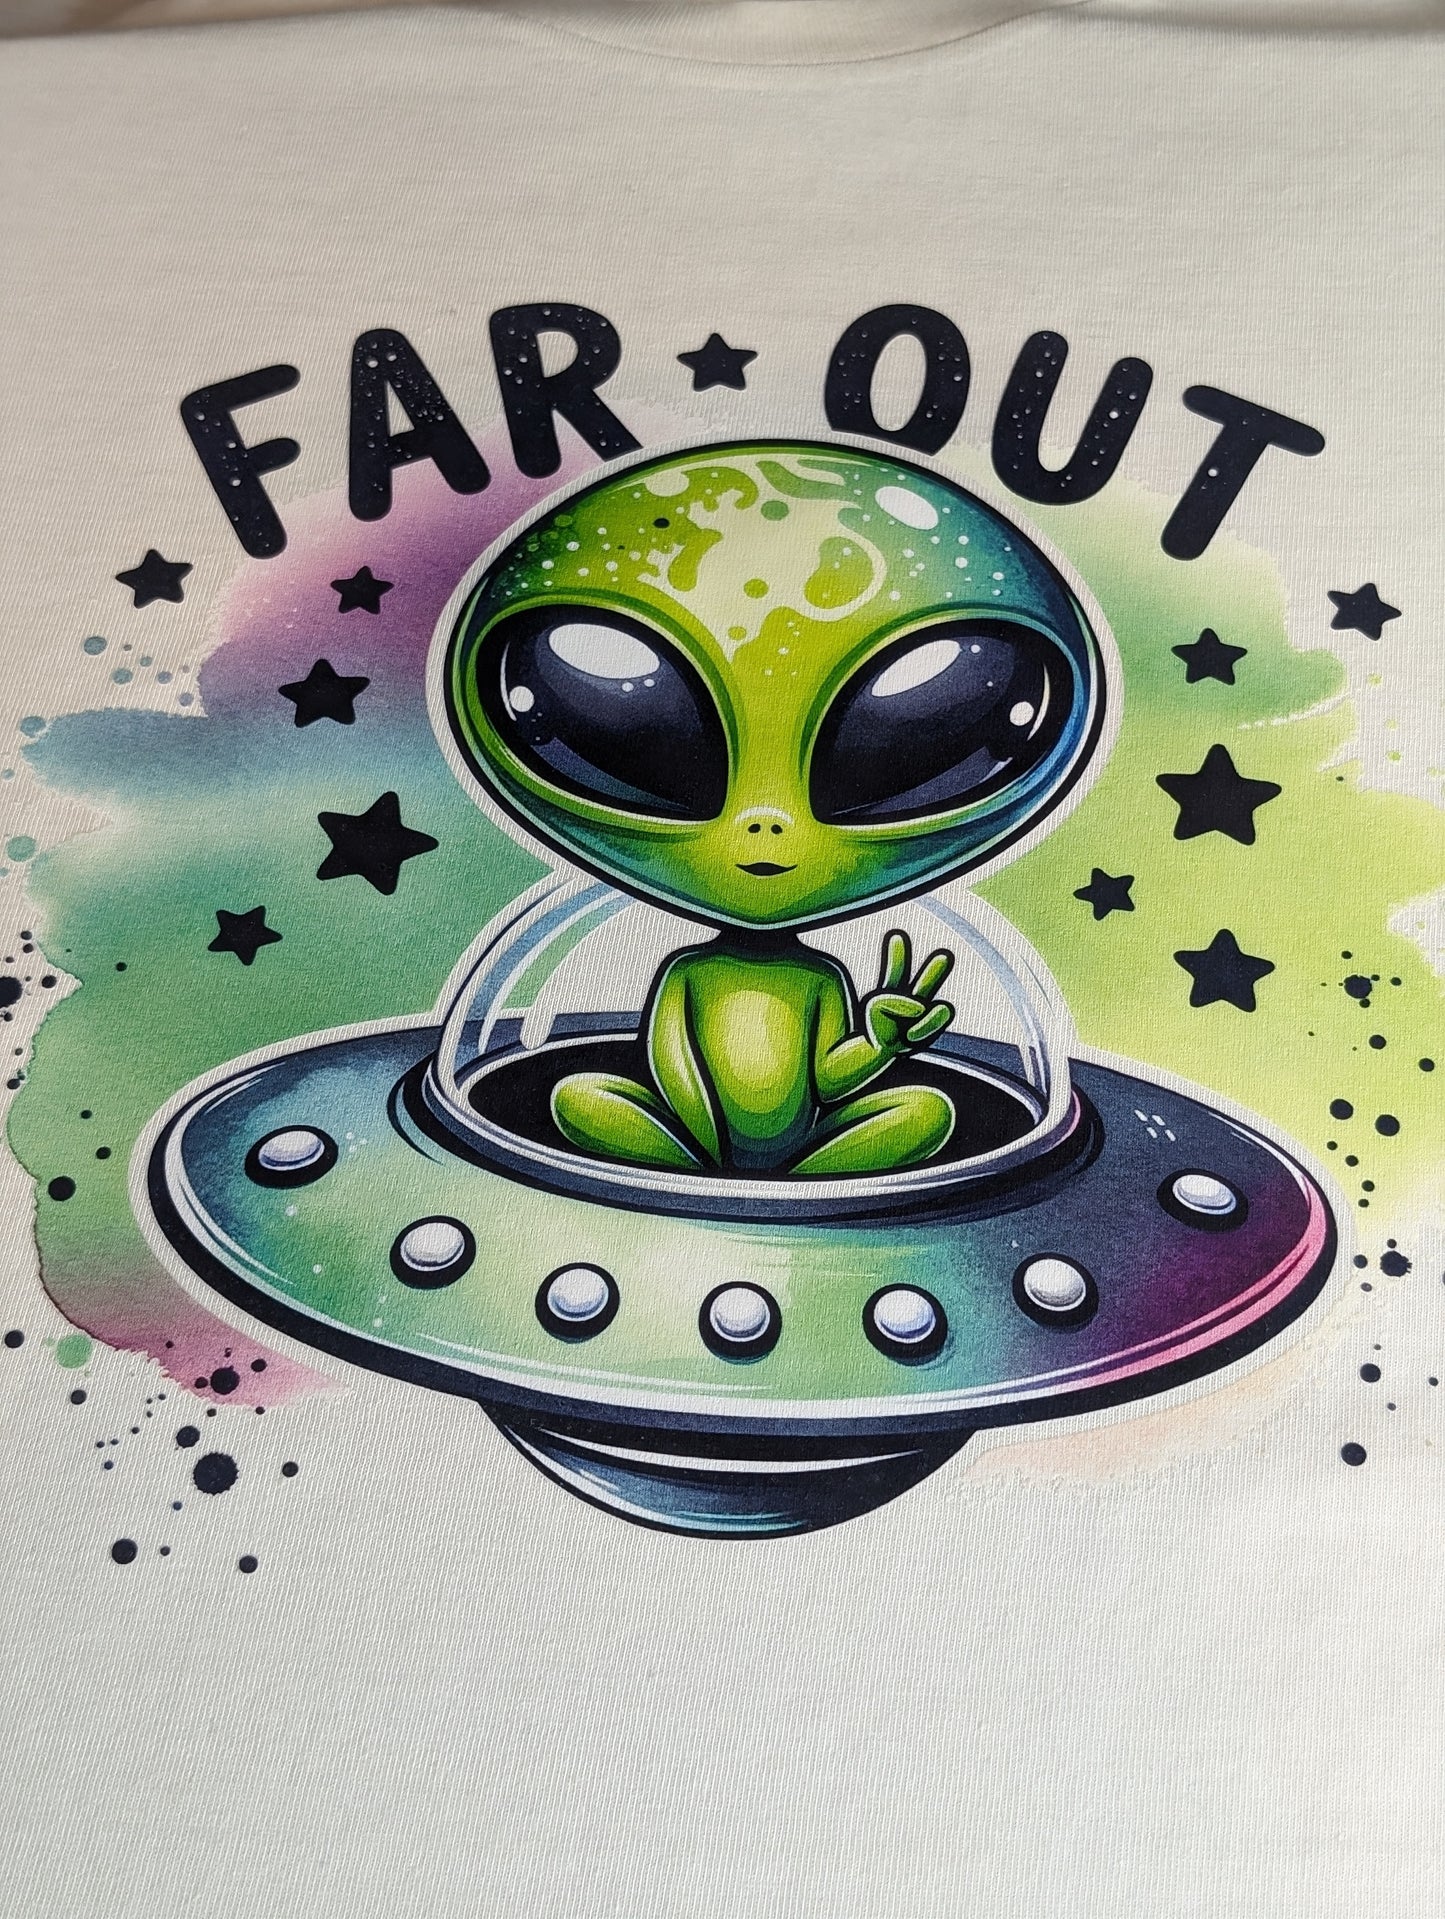 Far Out T-shirt